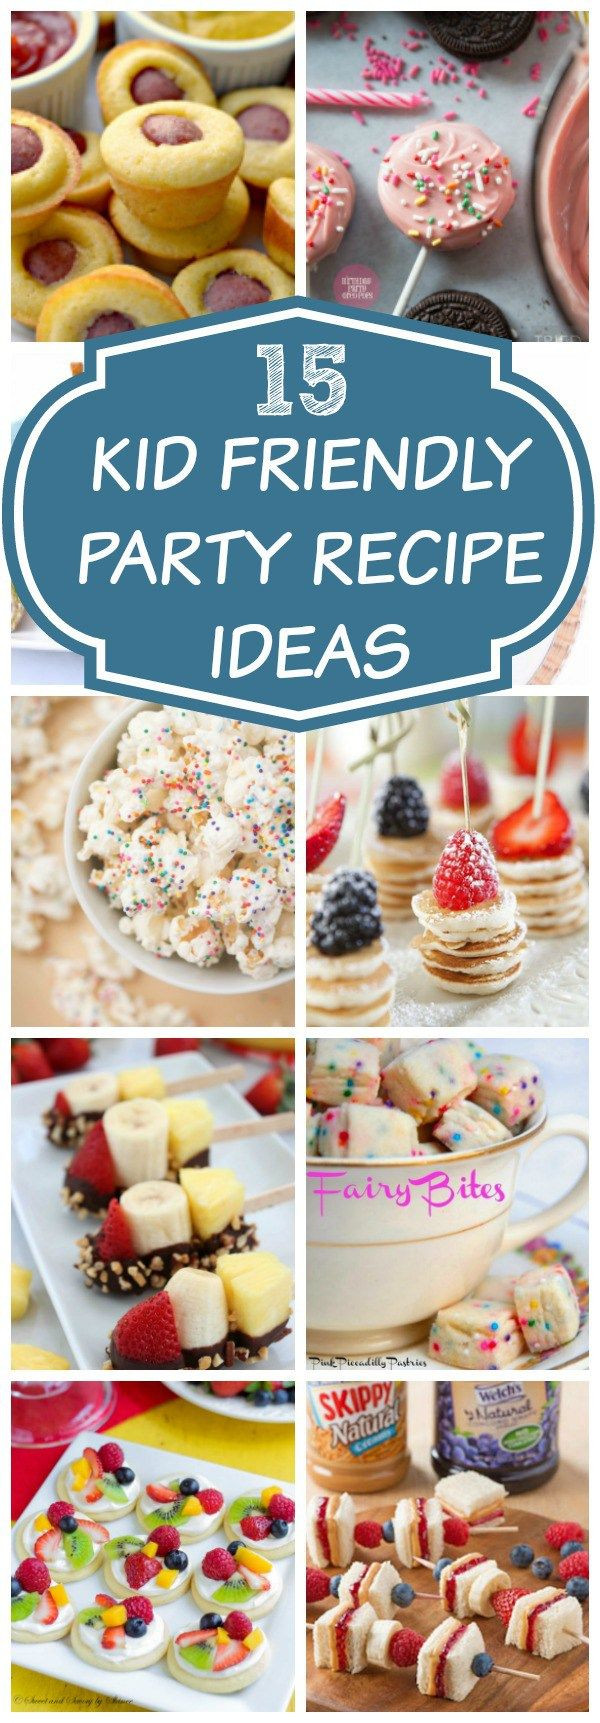 Teenage Party Foods Ideas
 Best 10 Teen party foods ideas on Pinterest